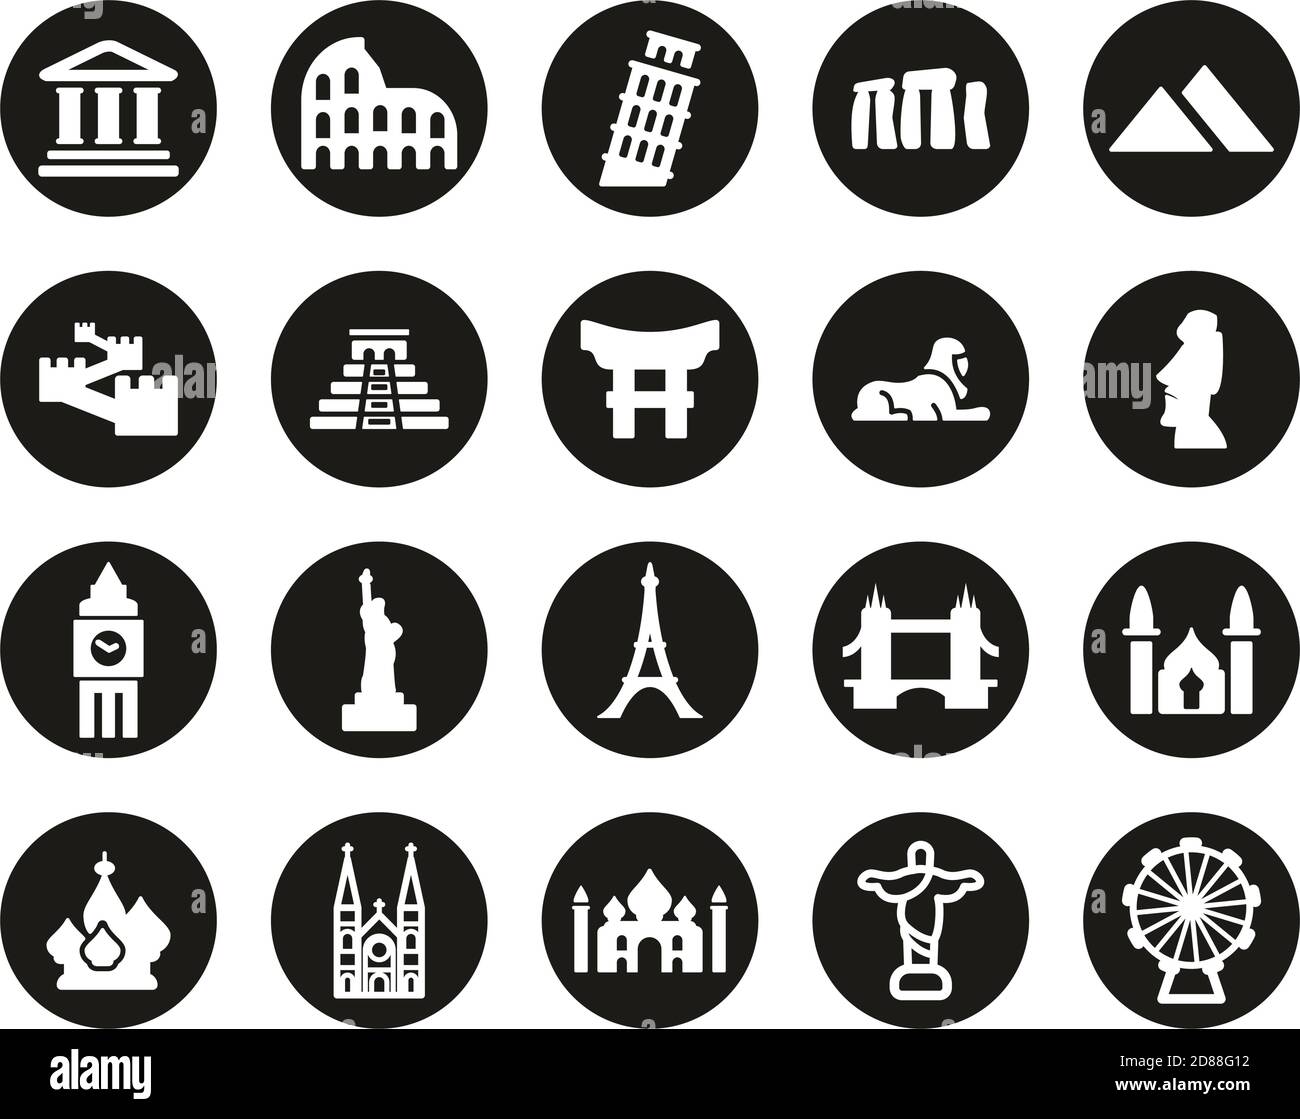 Landmarks Of The World Icons White On Black Flat Design Circle Set Big Stock Vector